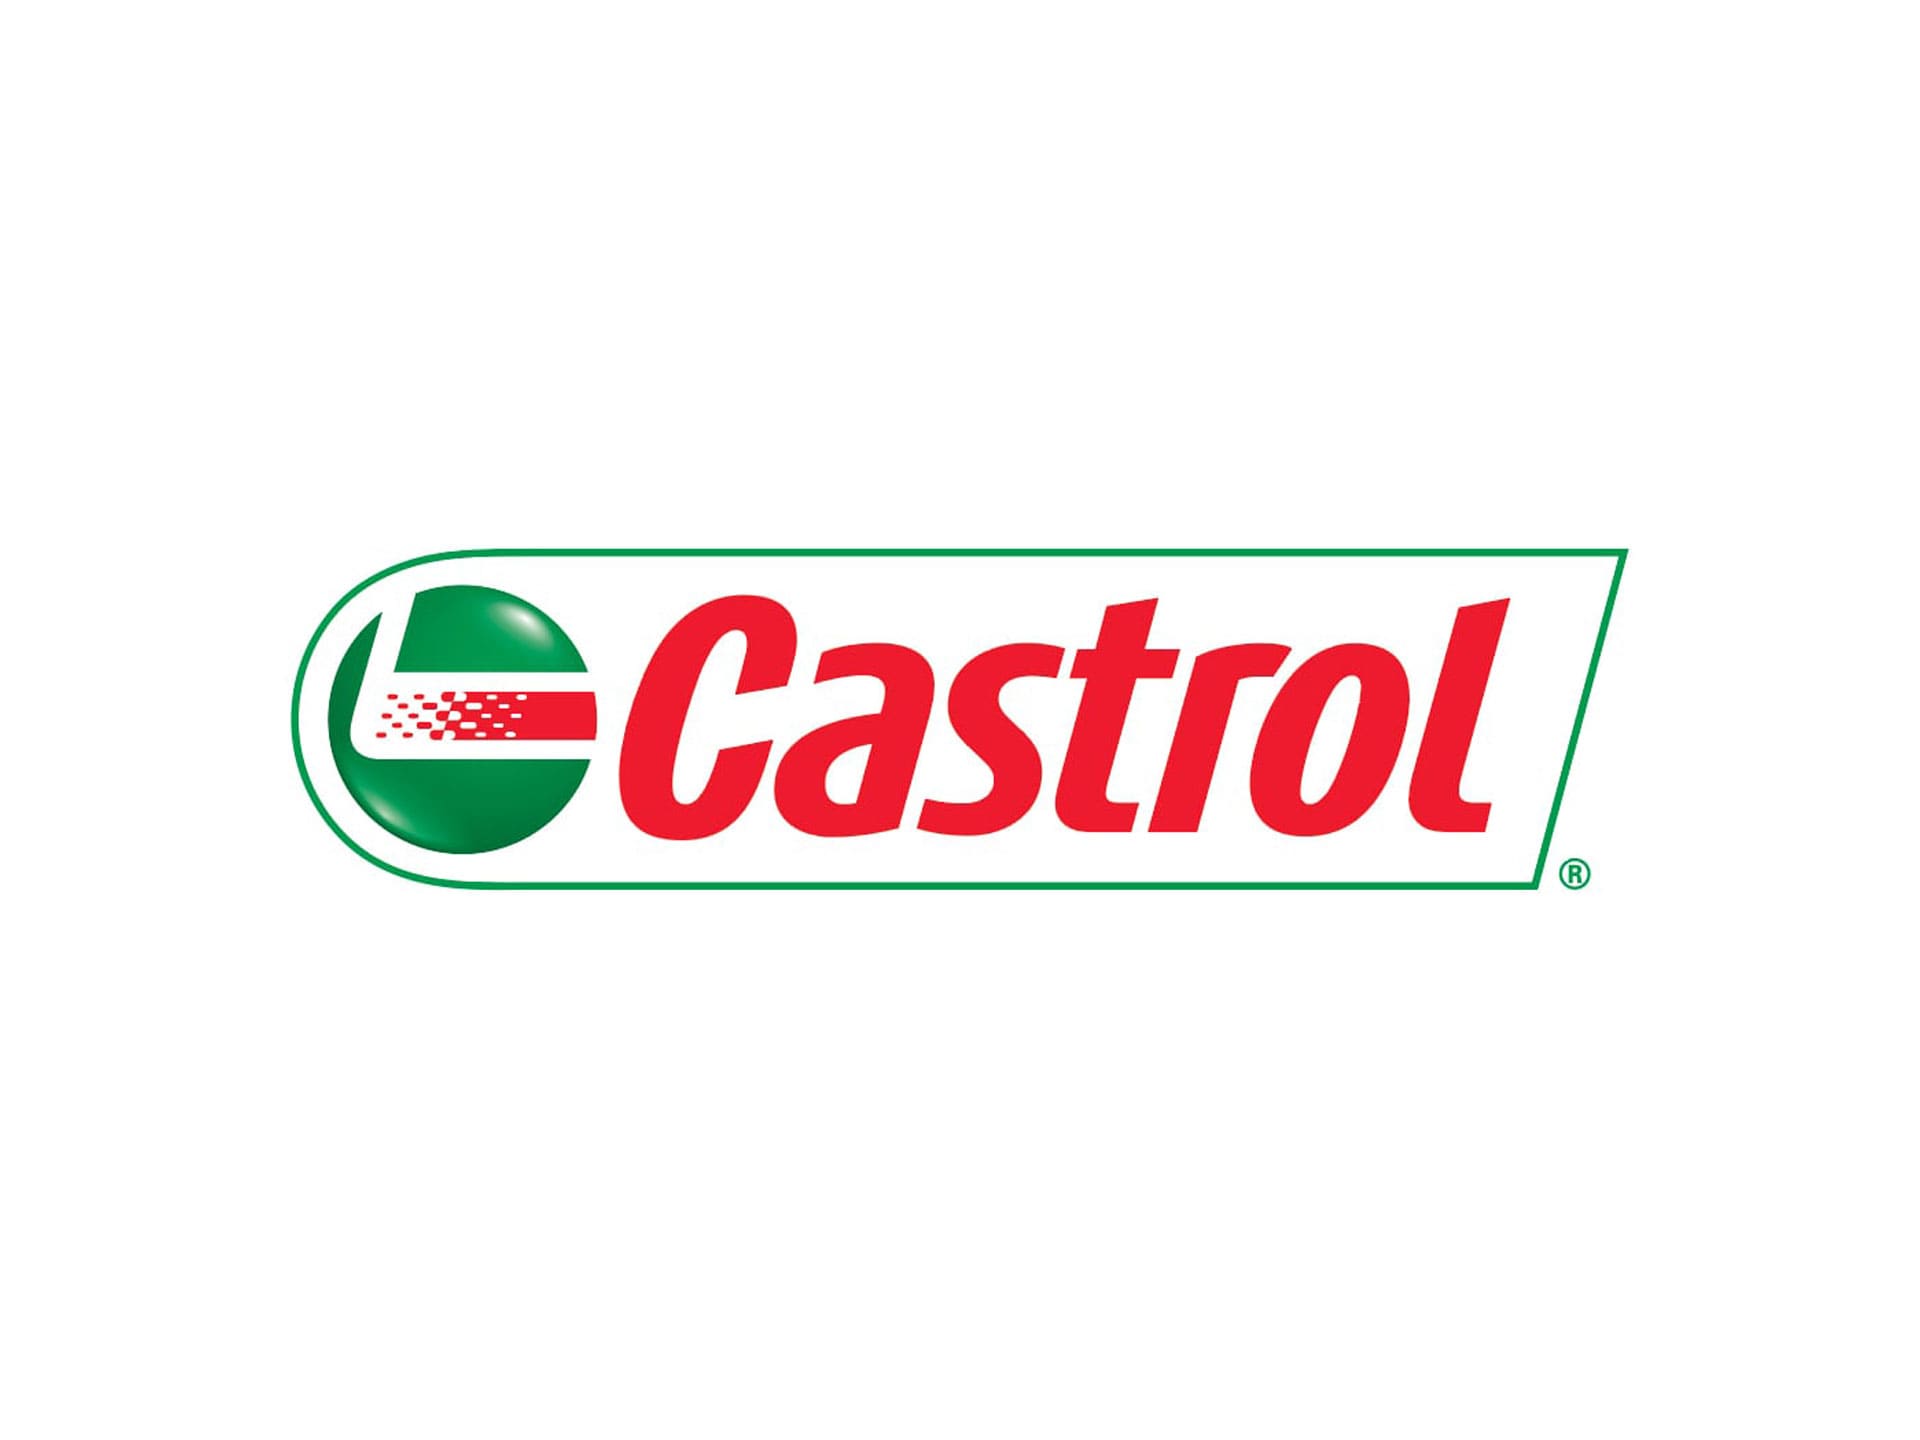 Logo Castrol